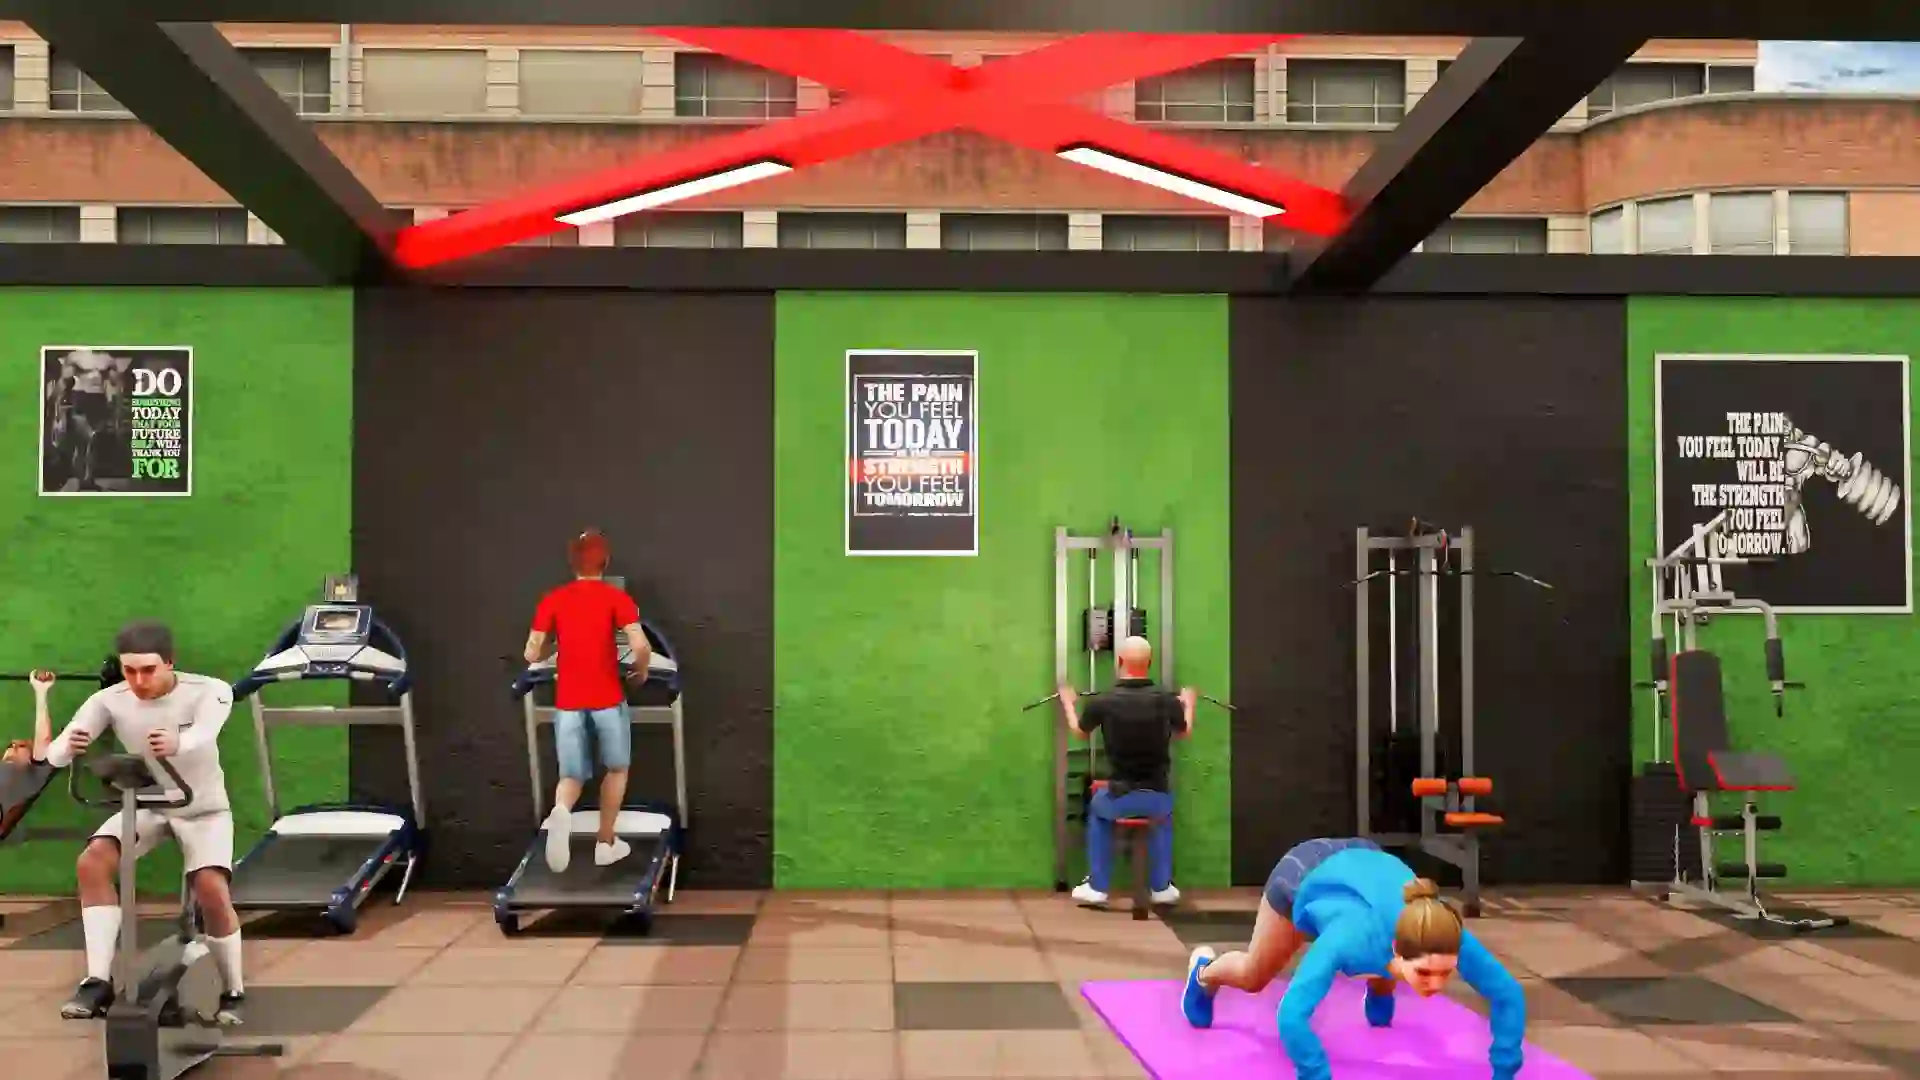 Gym Simulator 24